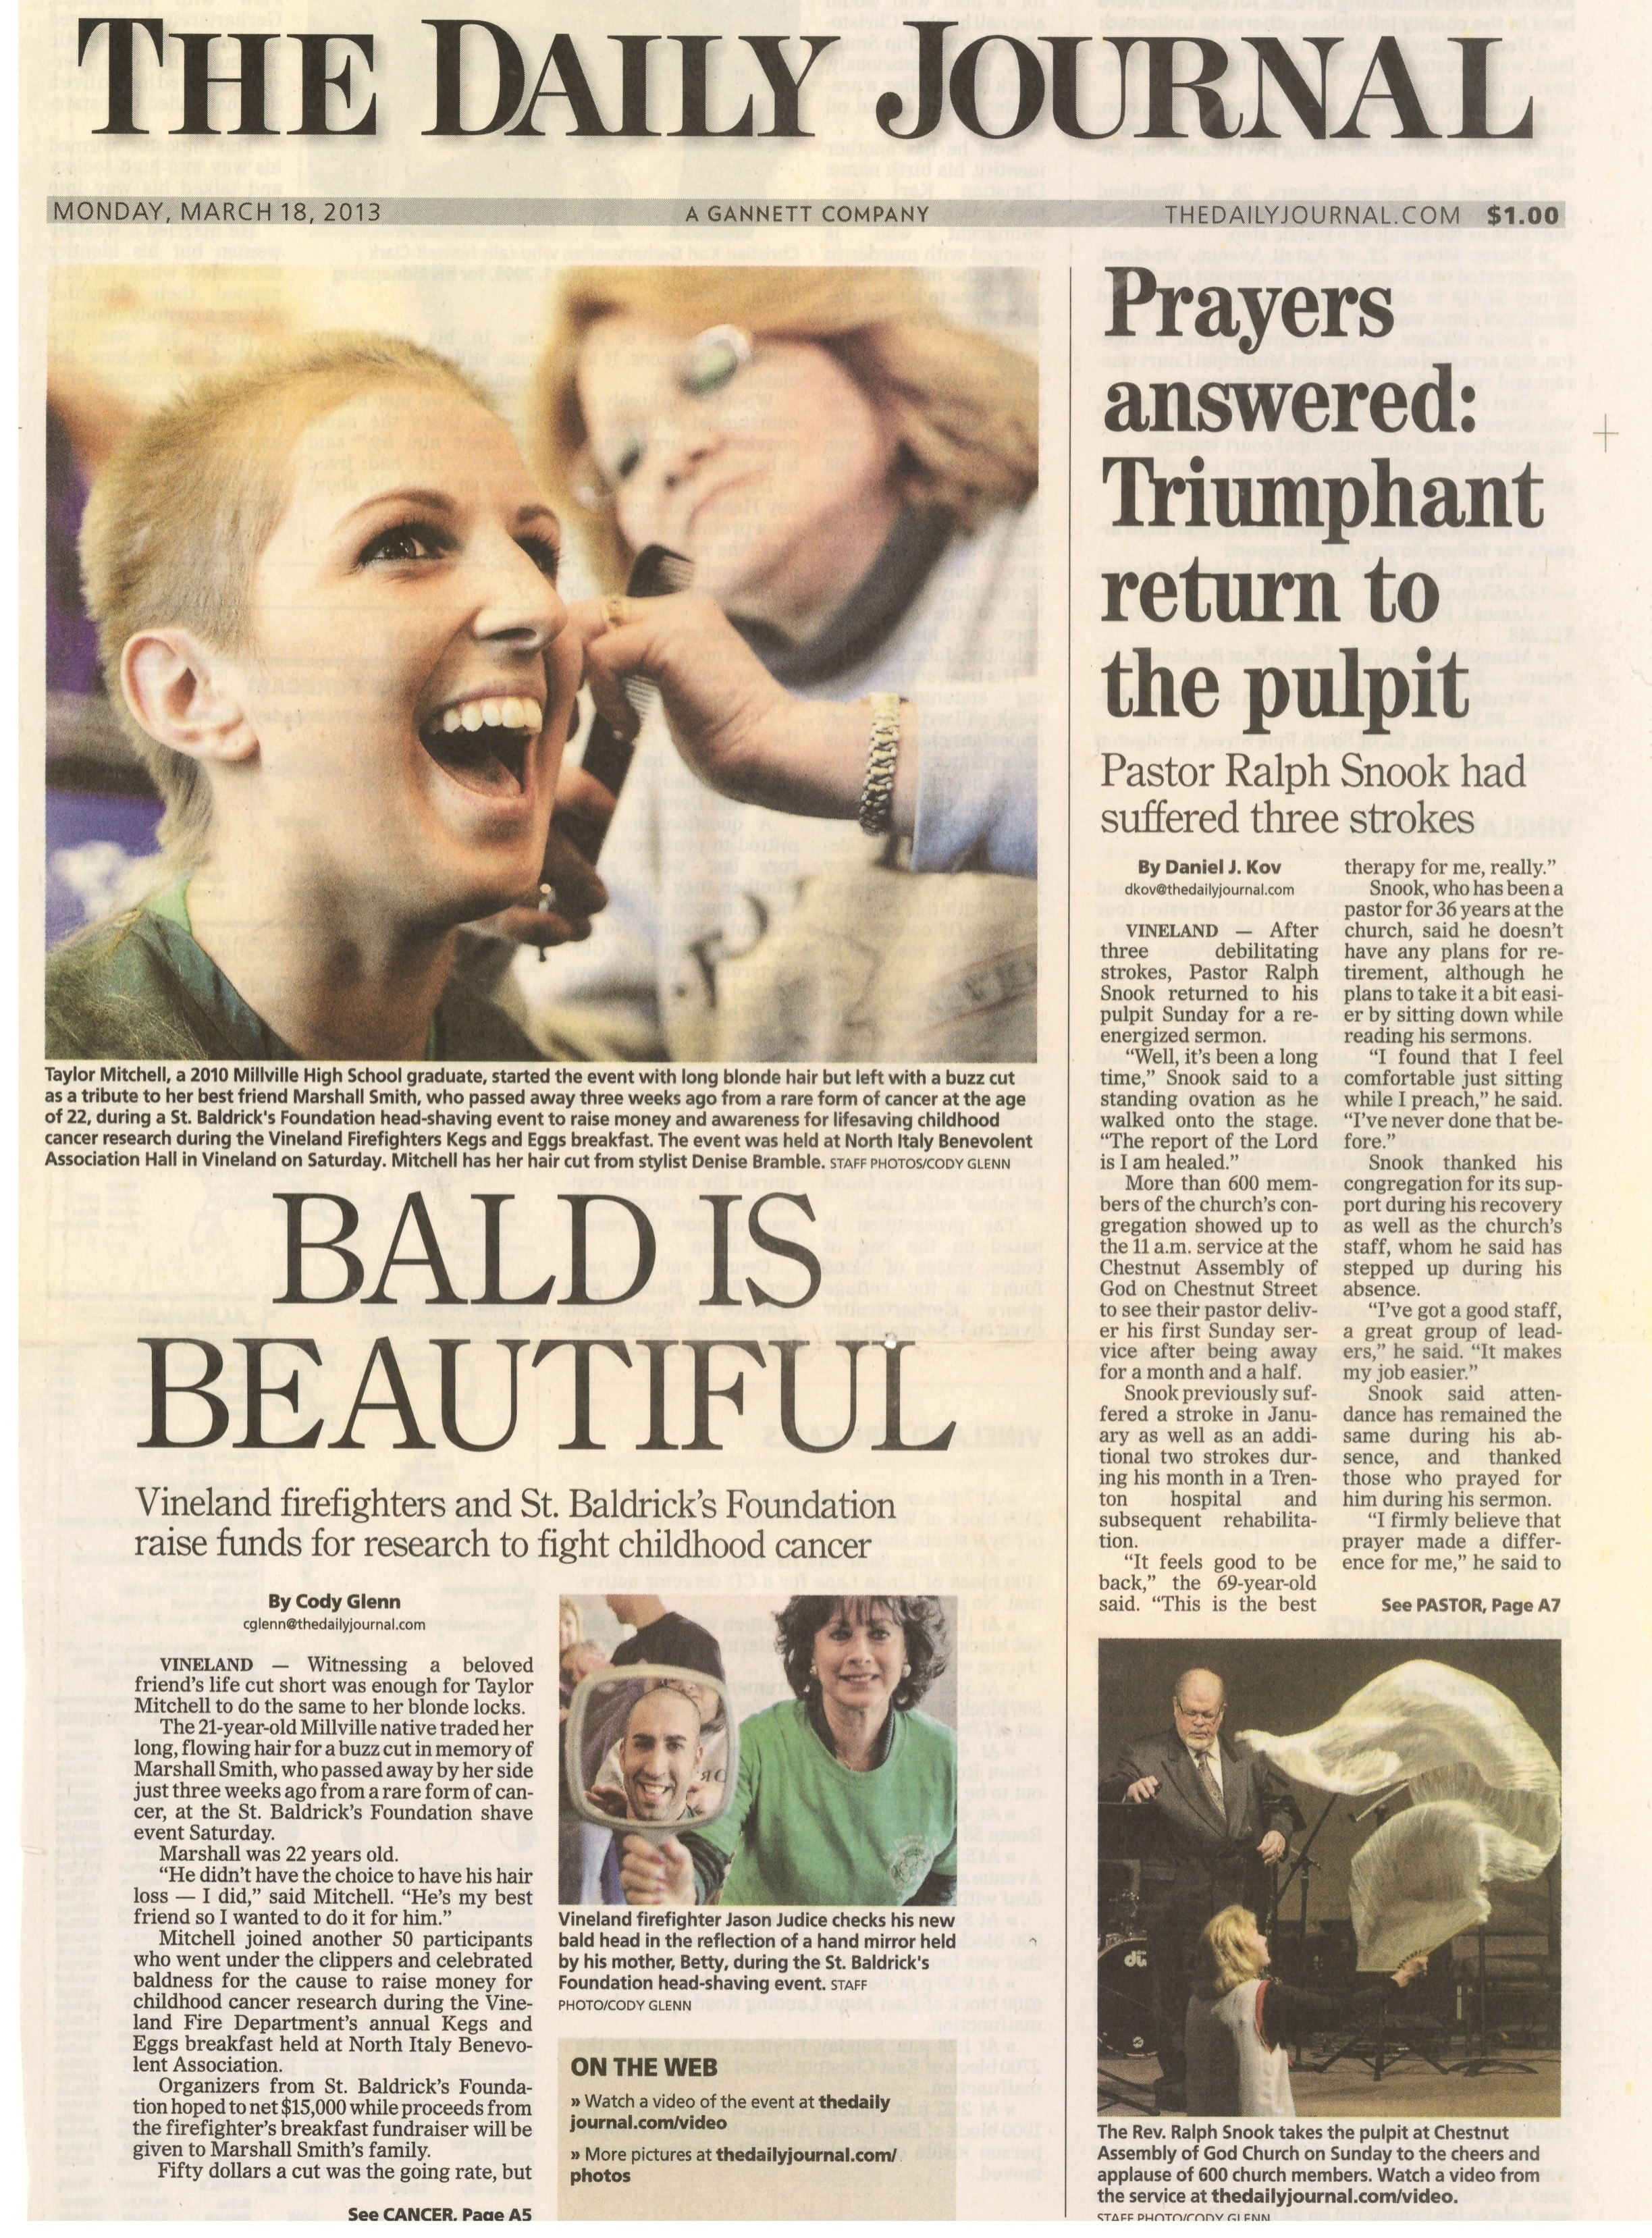  Cancer benefit St. Baldrick's held in Vineland March 18 2013 /&nbsp; The Daily Journal  